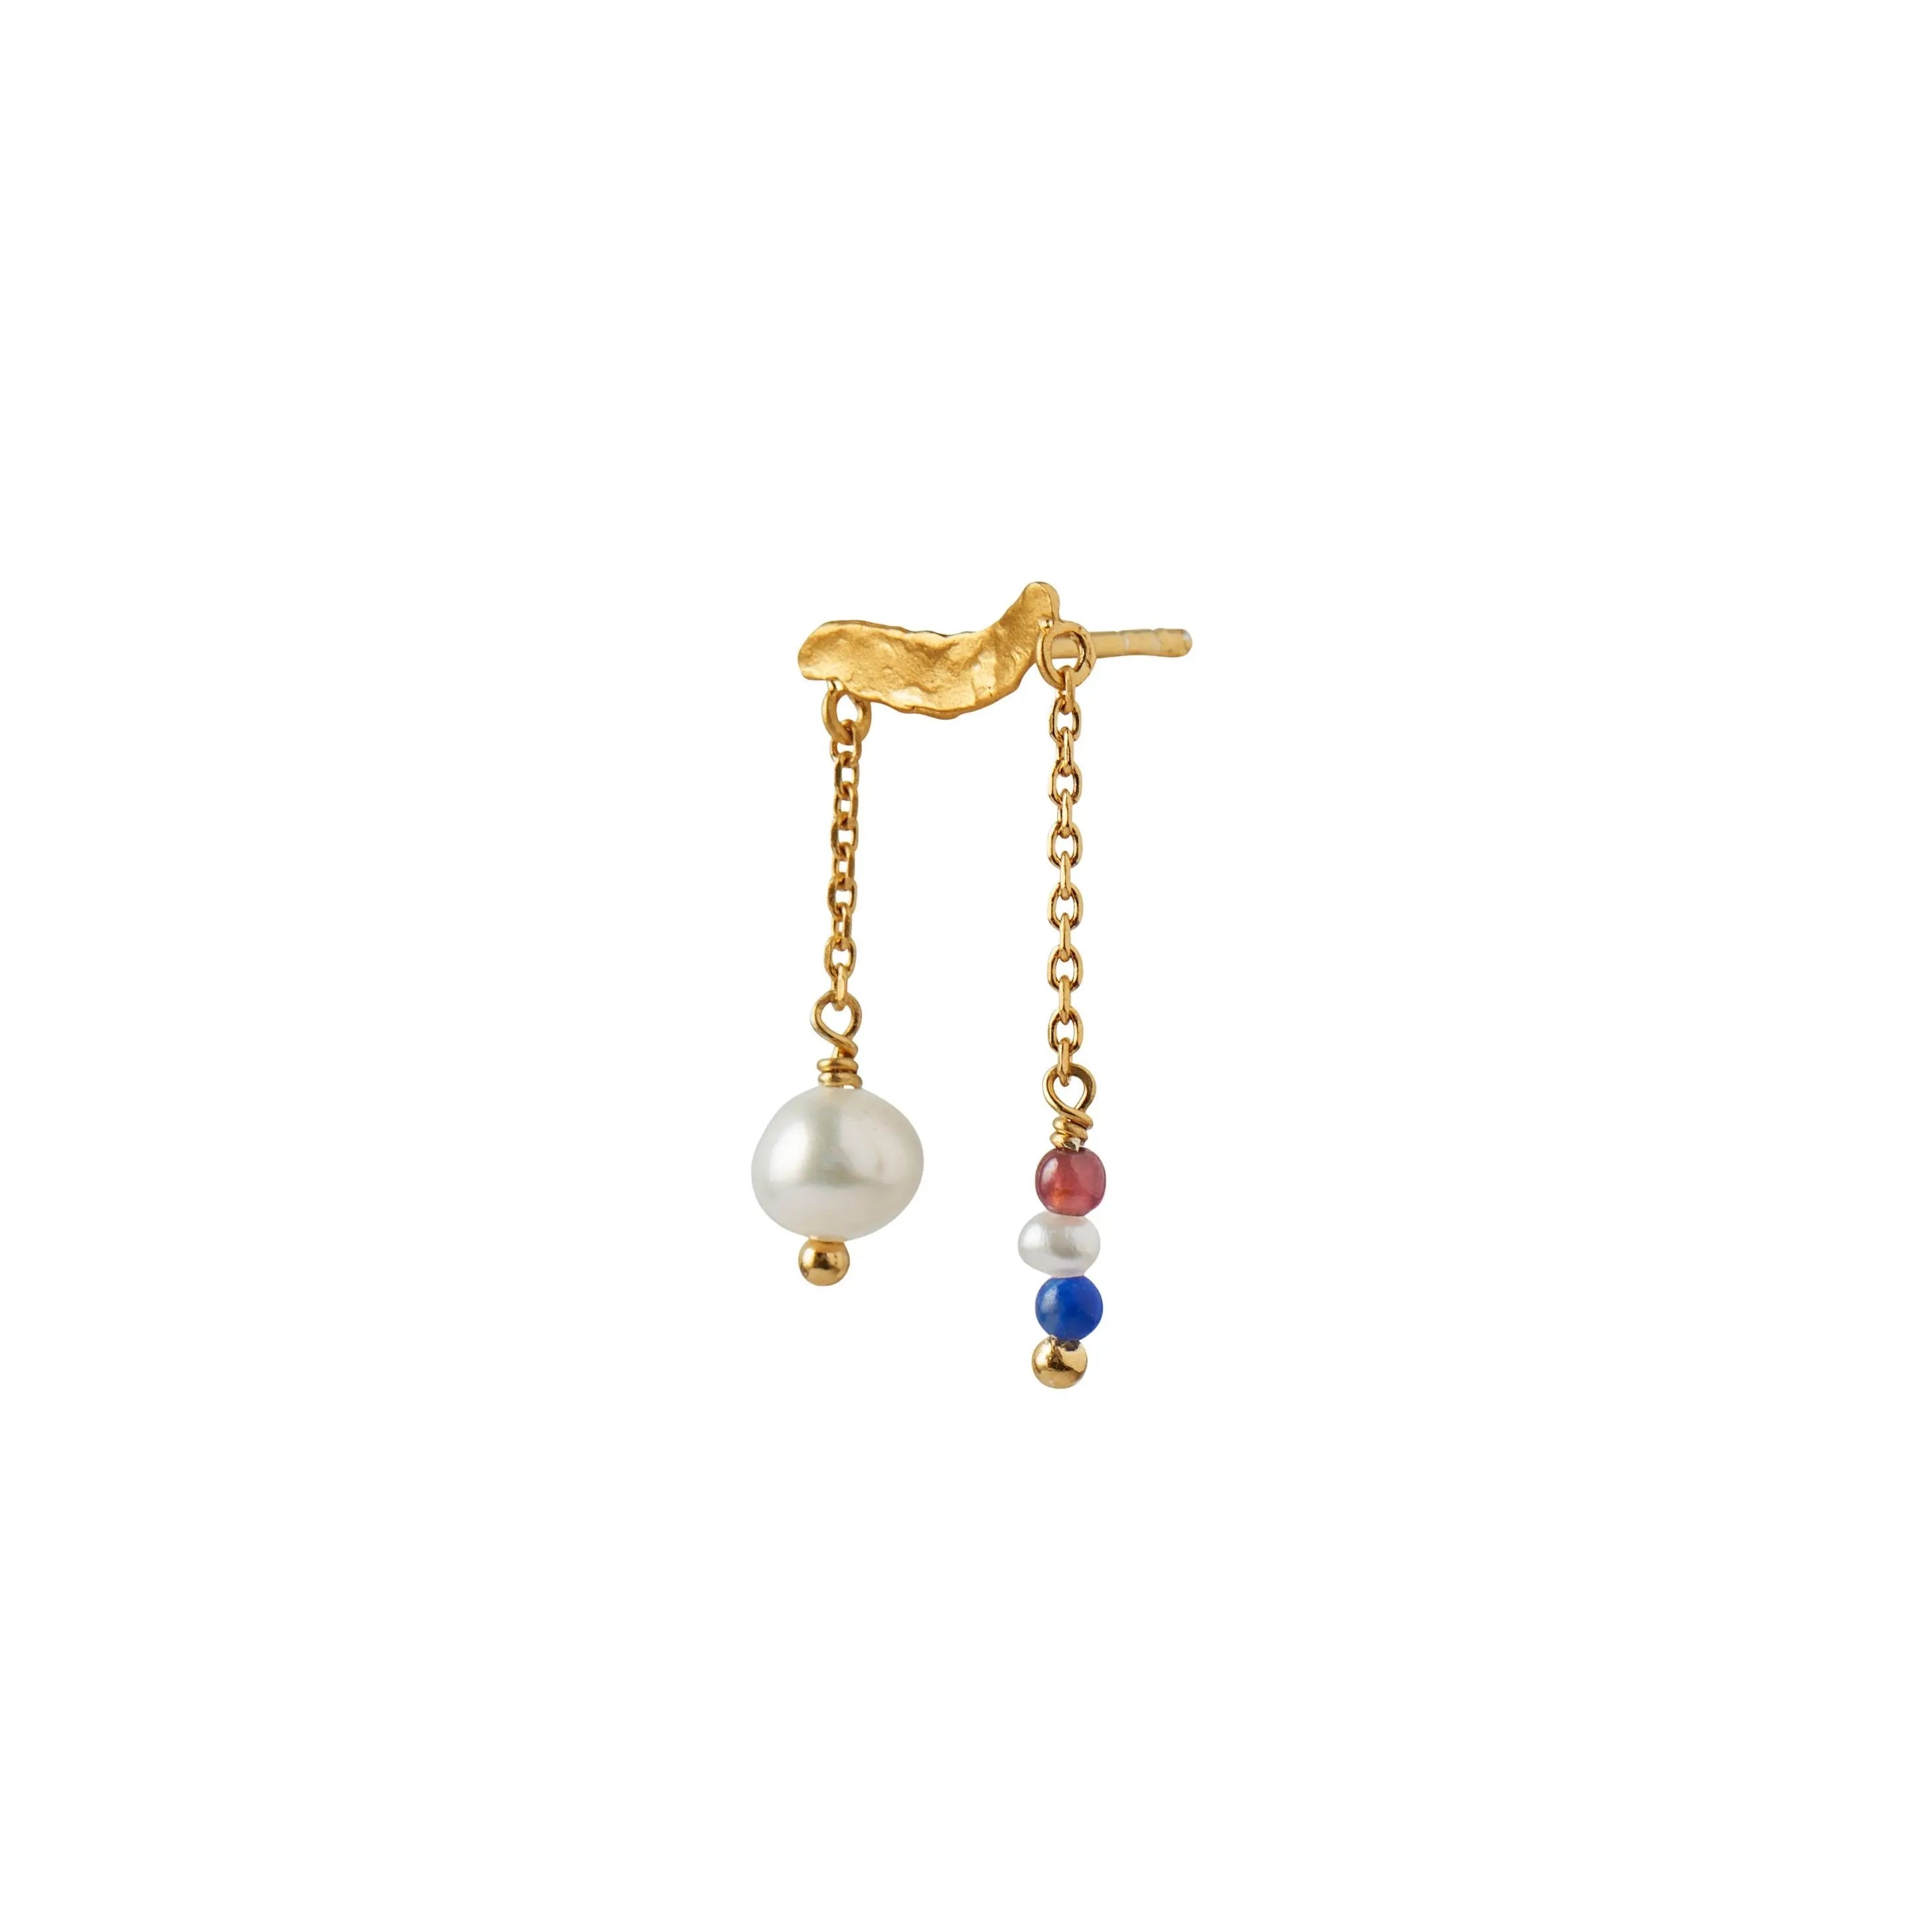 Petit gold splash chains & french kiss øreringe - Forgyldt fra Stine A Jewelry